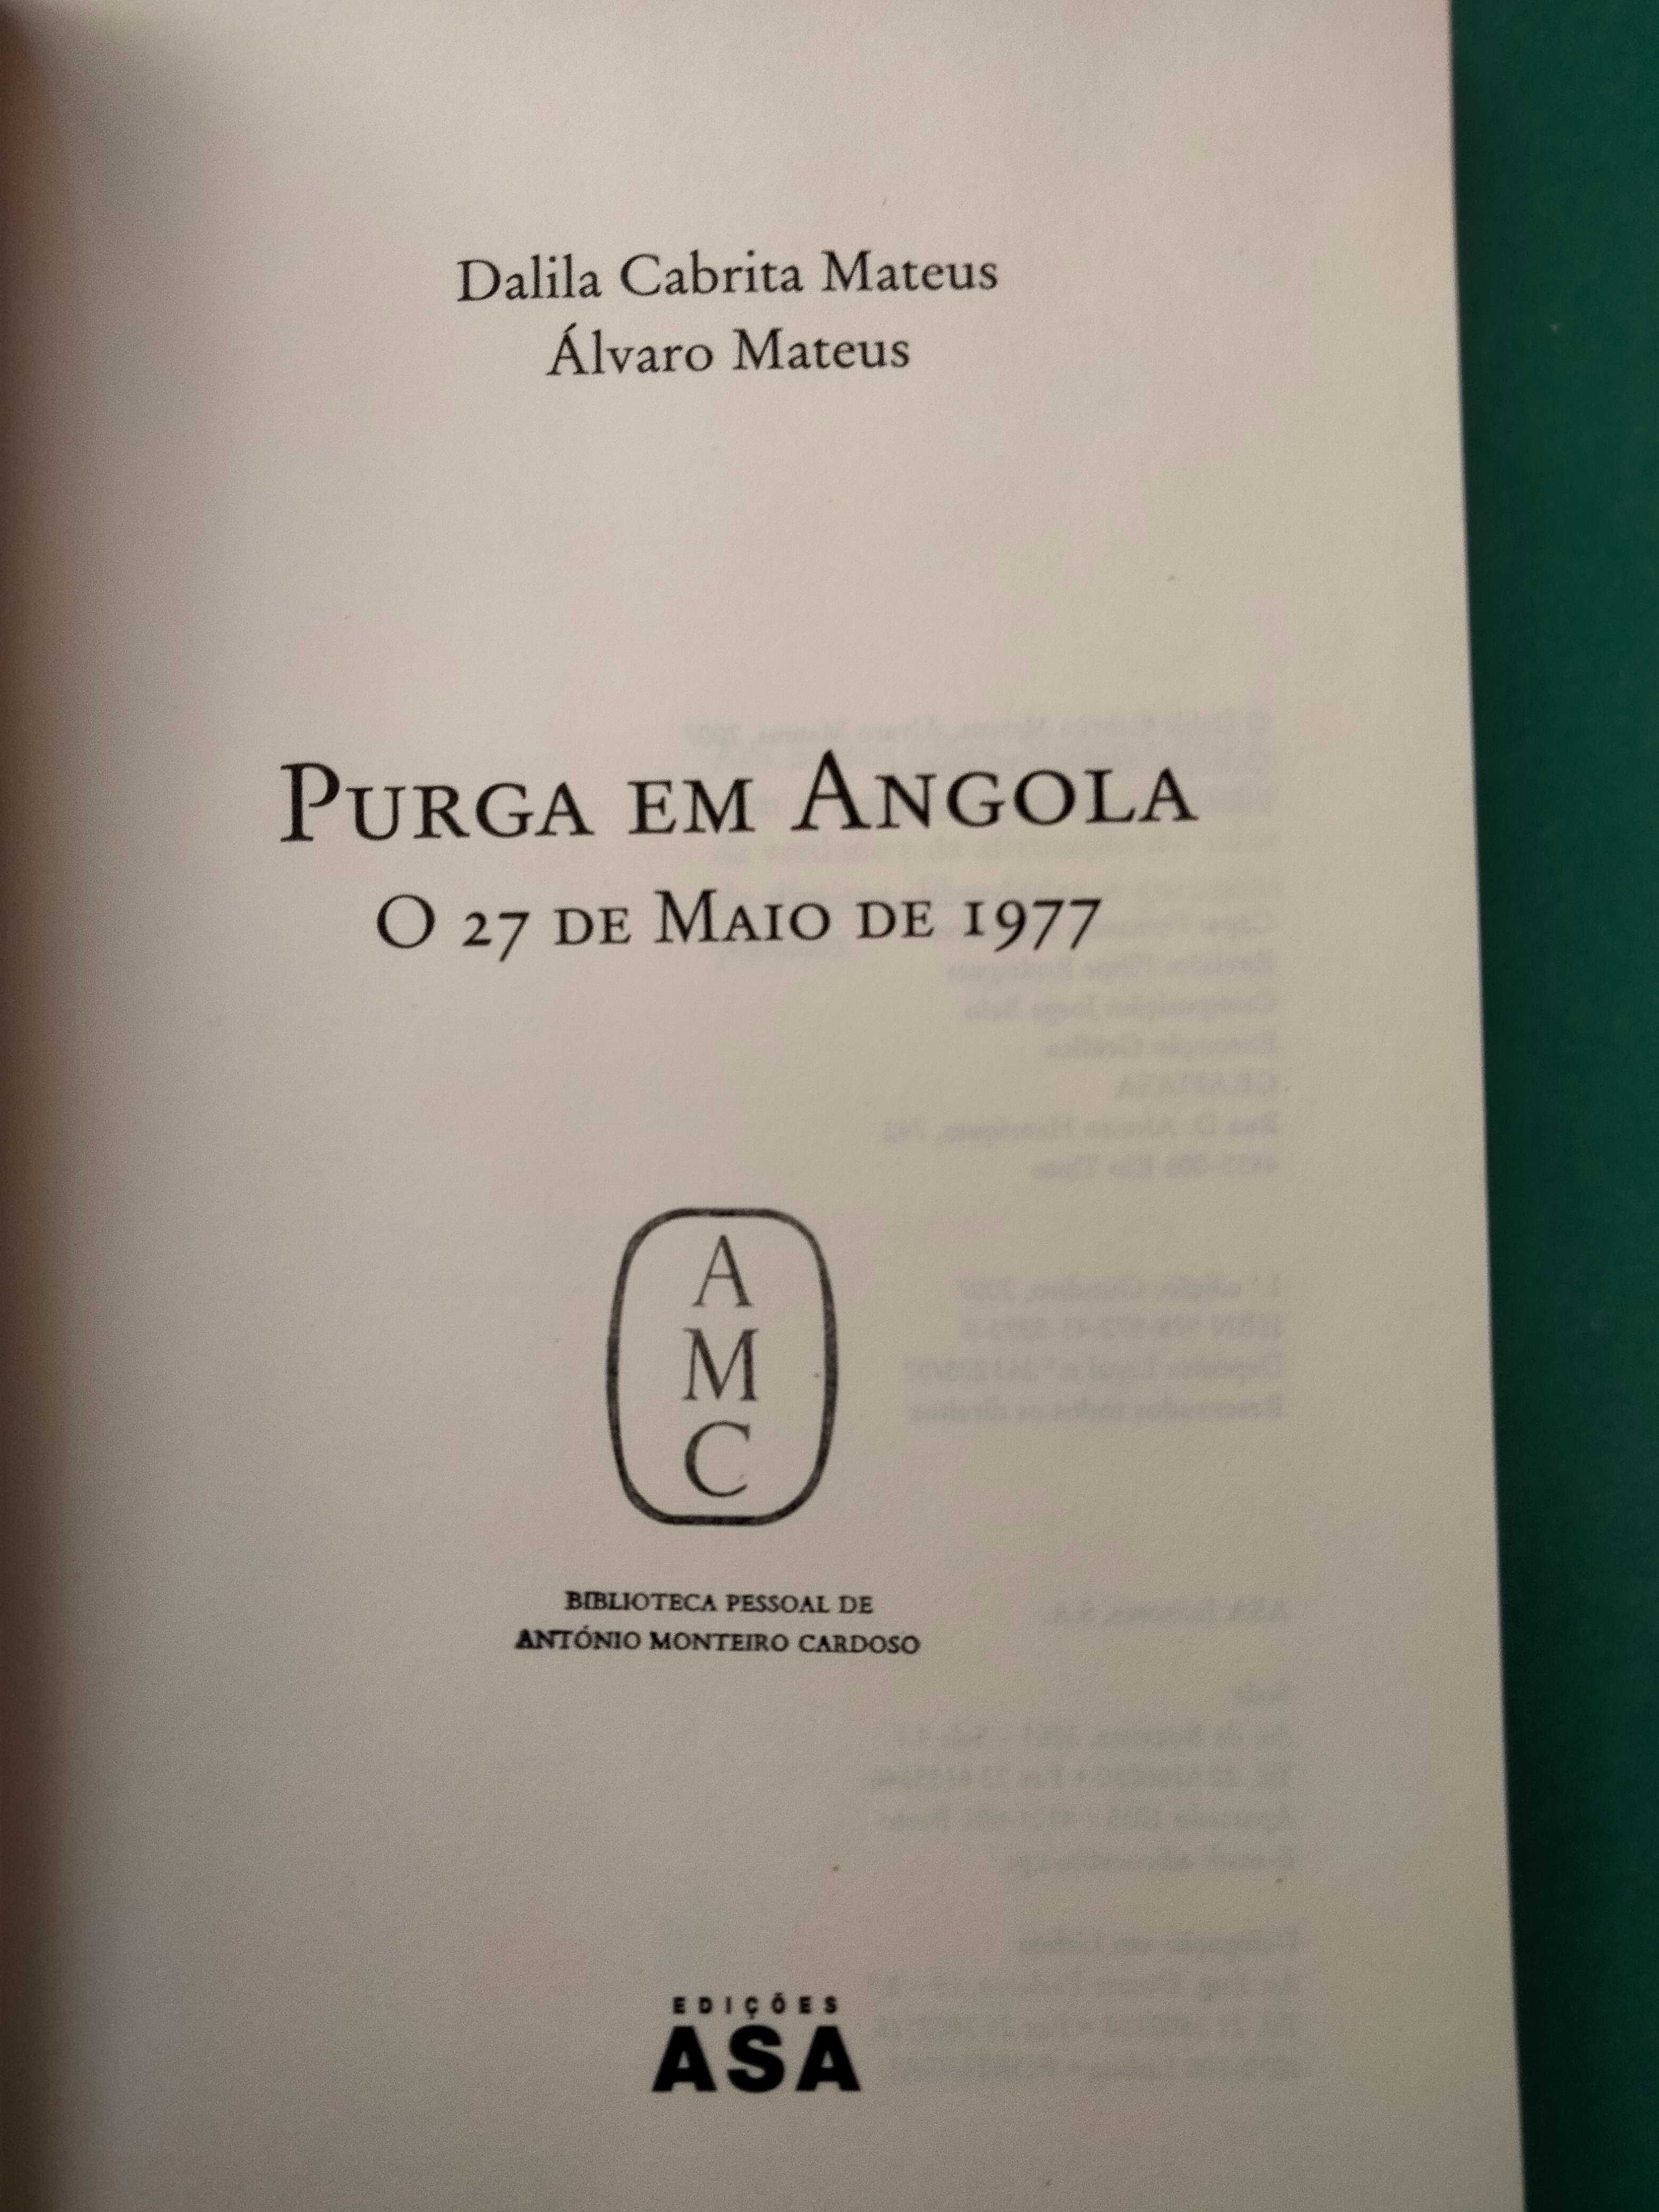 Purga em Angola - Dalila Cabrita Mateus / Álvaro Mateus